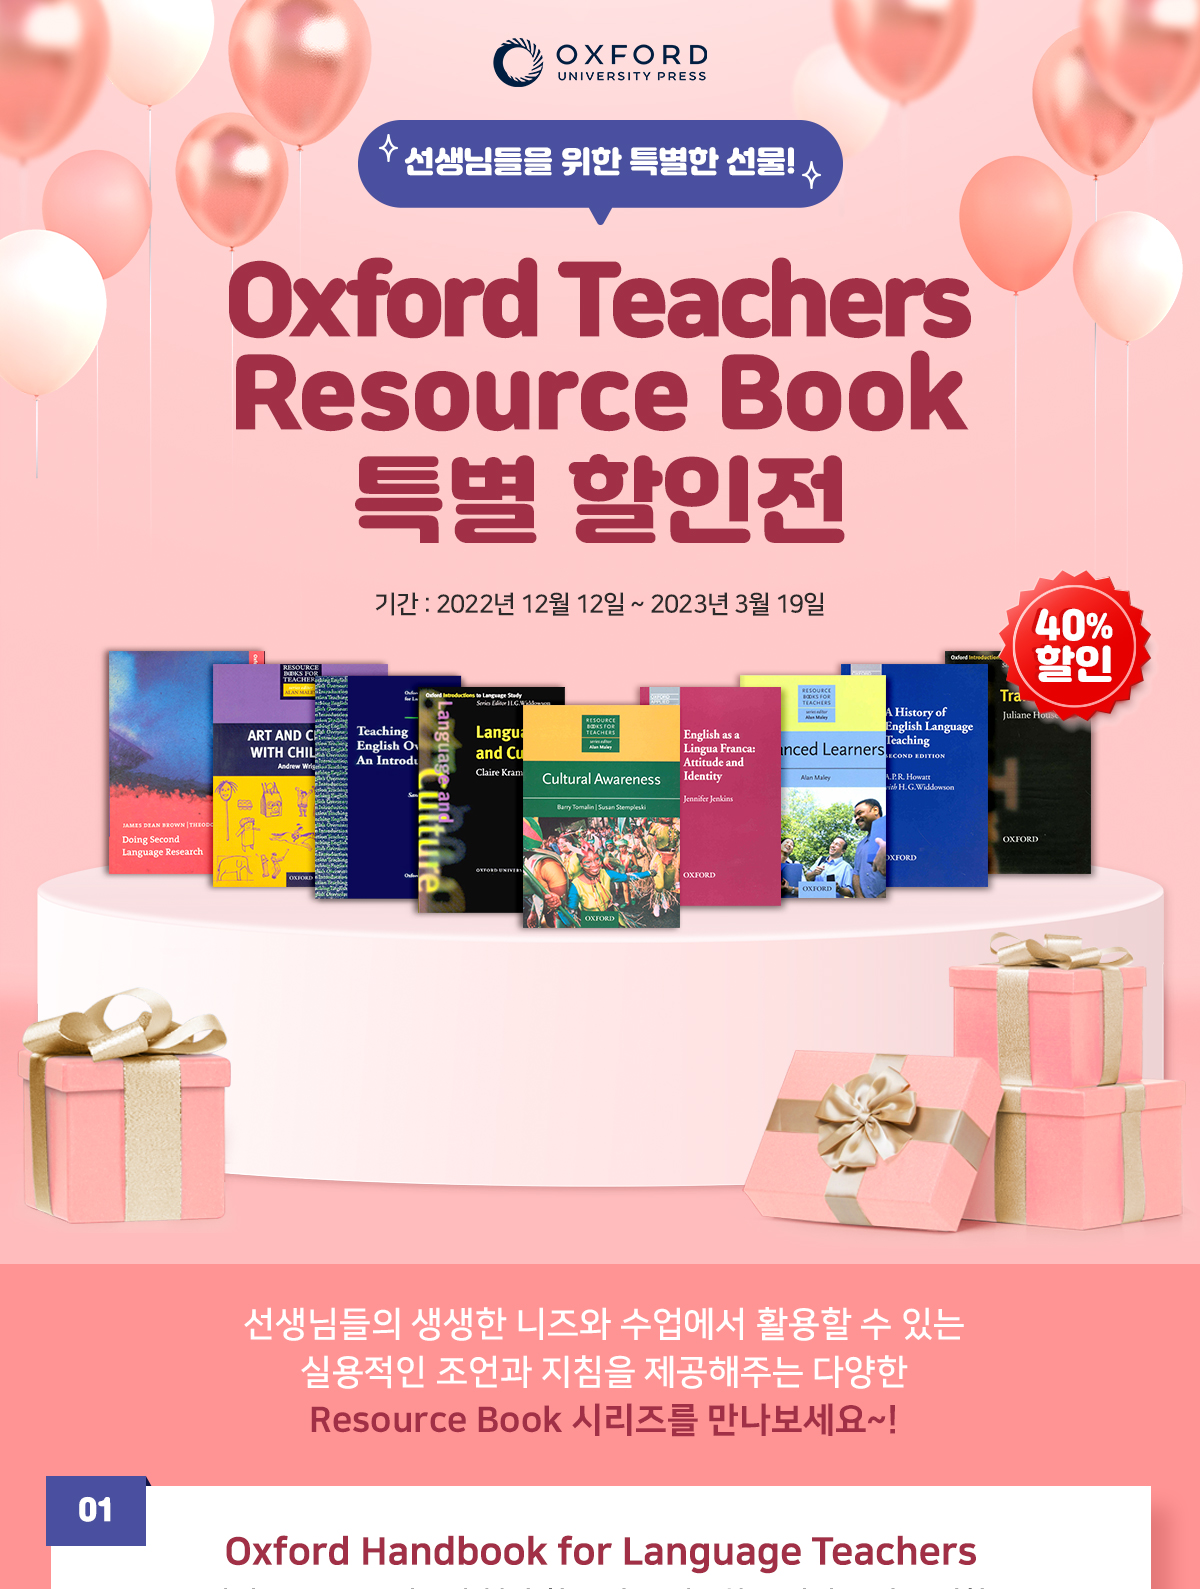 Oxford Teachers Resource Box 특별할인전